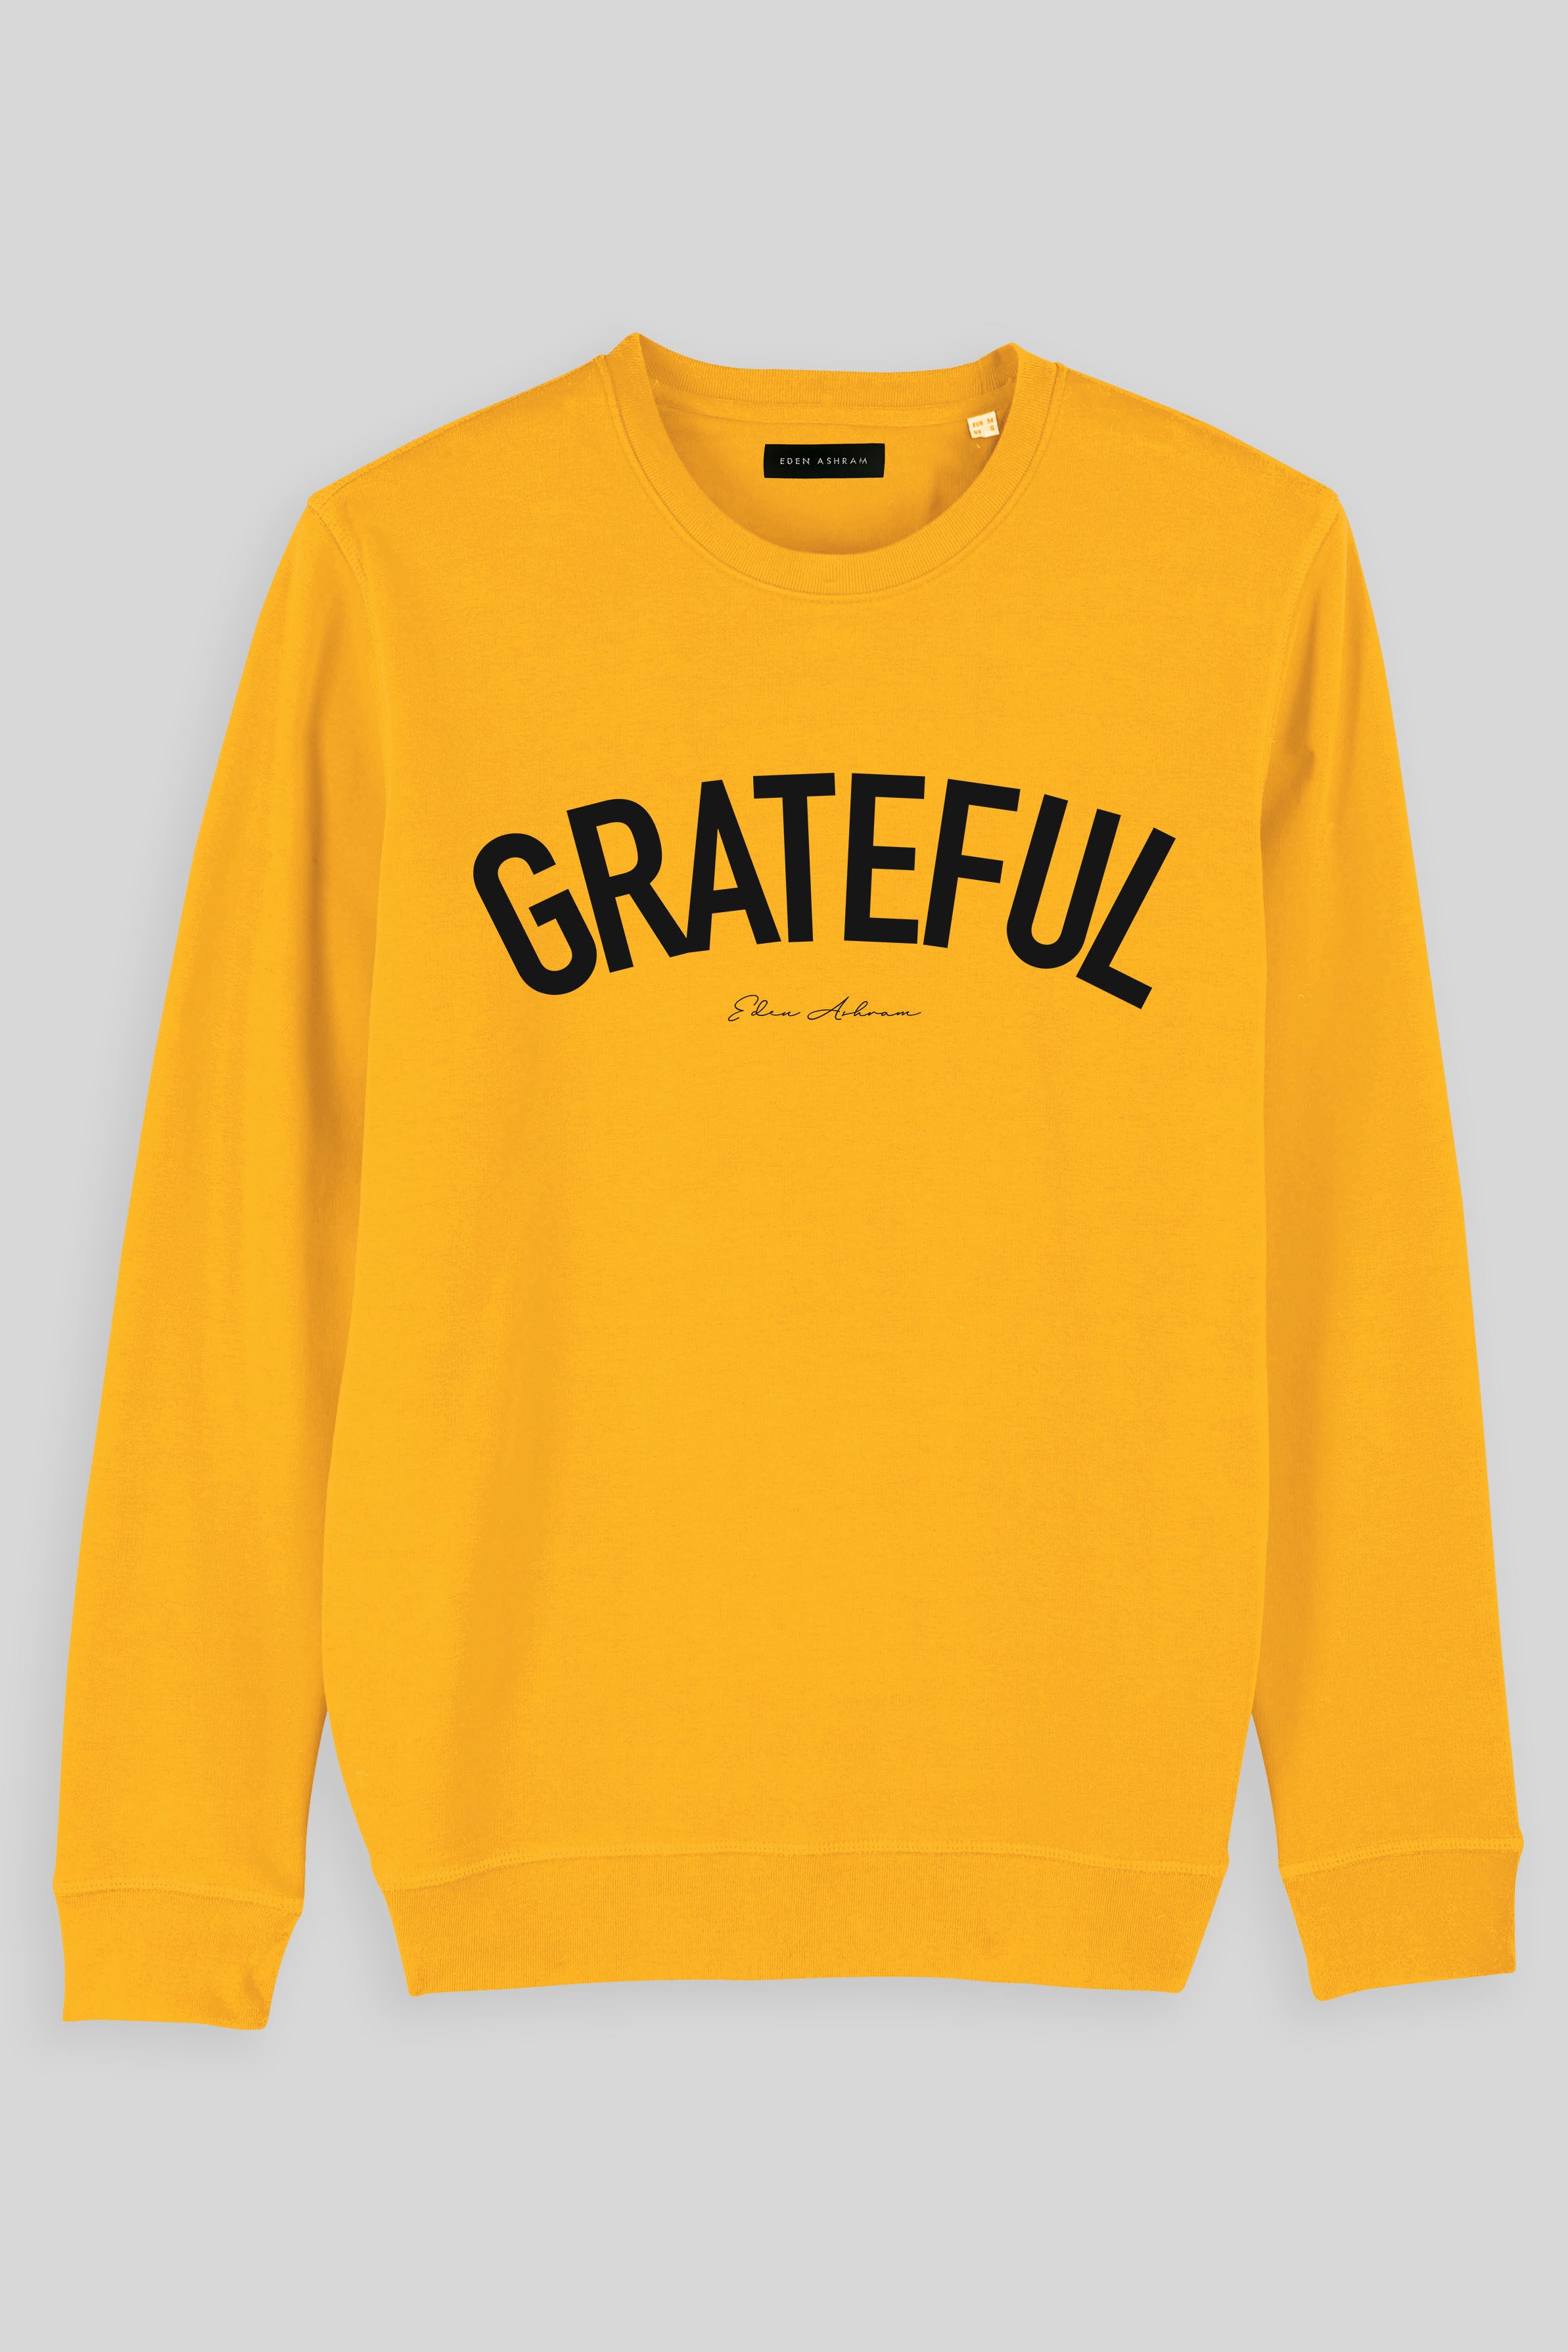 EDEN ASHRAM Grateful Premium Crew Neck Sweatshirt Spectra Yellow